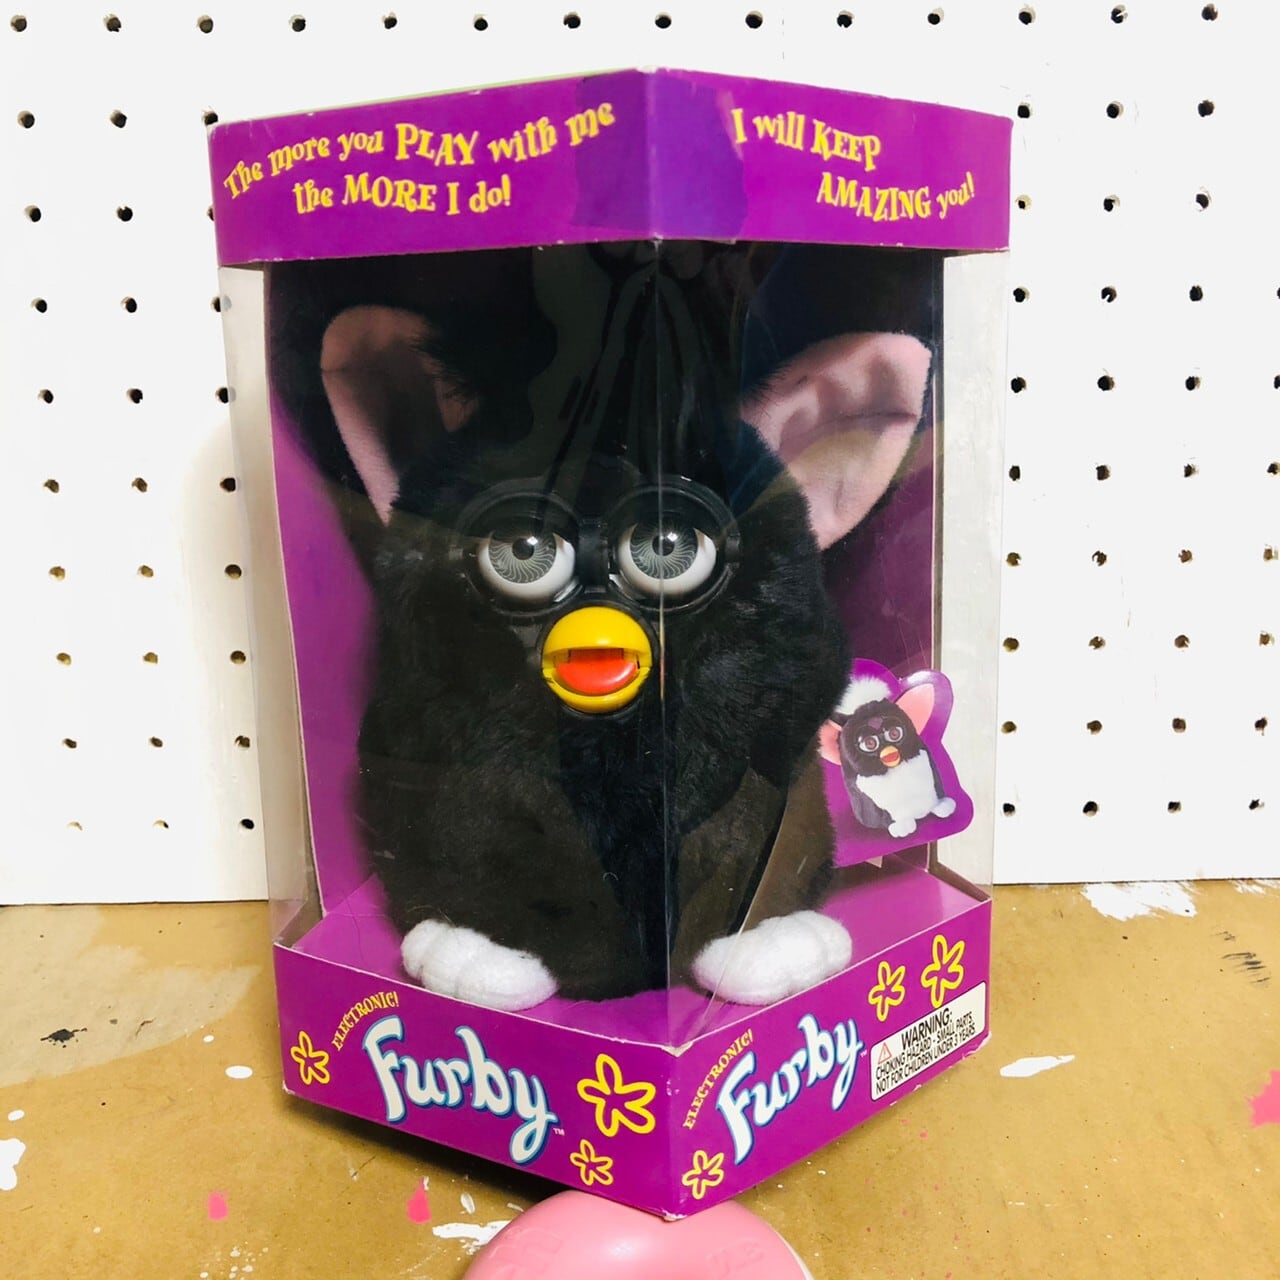 90s レア 初代ファービー 未開封品 ブラック Electronic Furby Black The Puppez E Shop ザ パペッツ松本 Webショップ